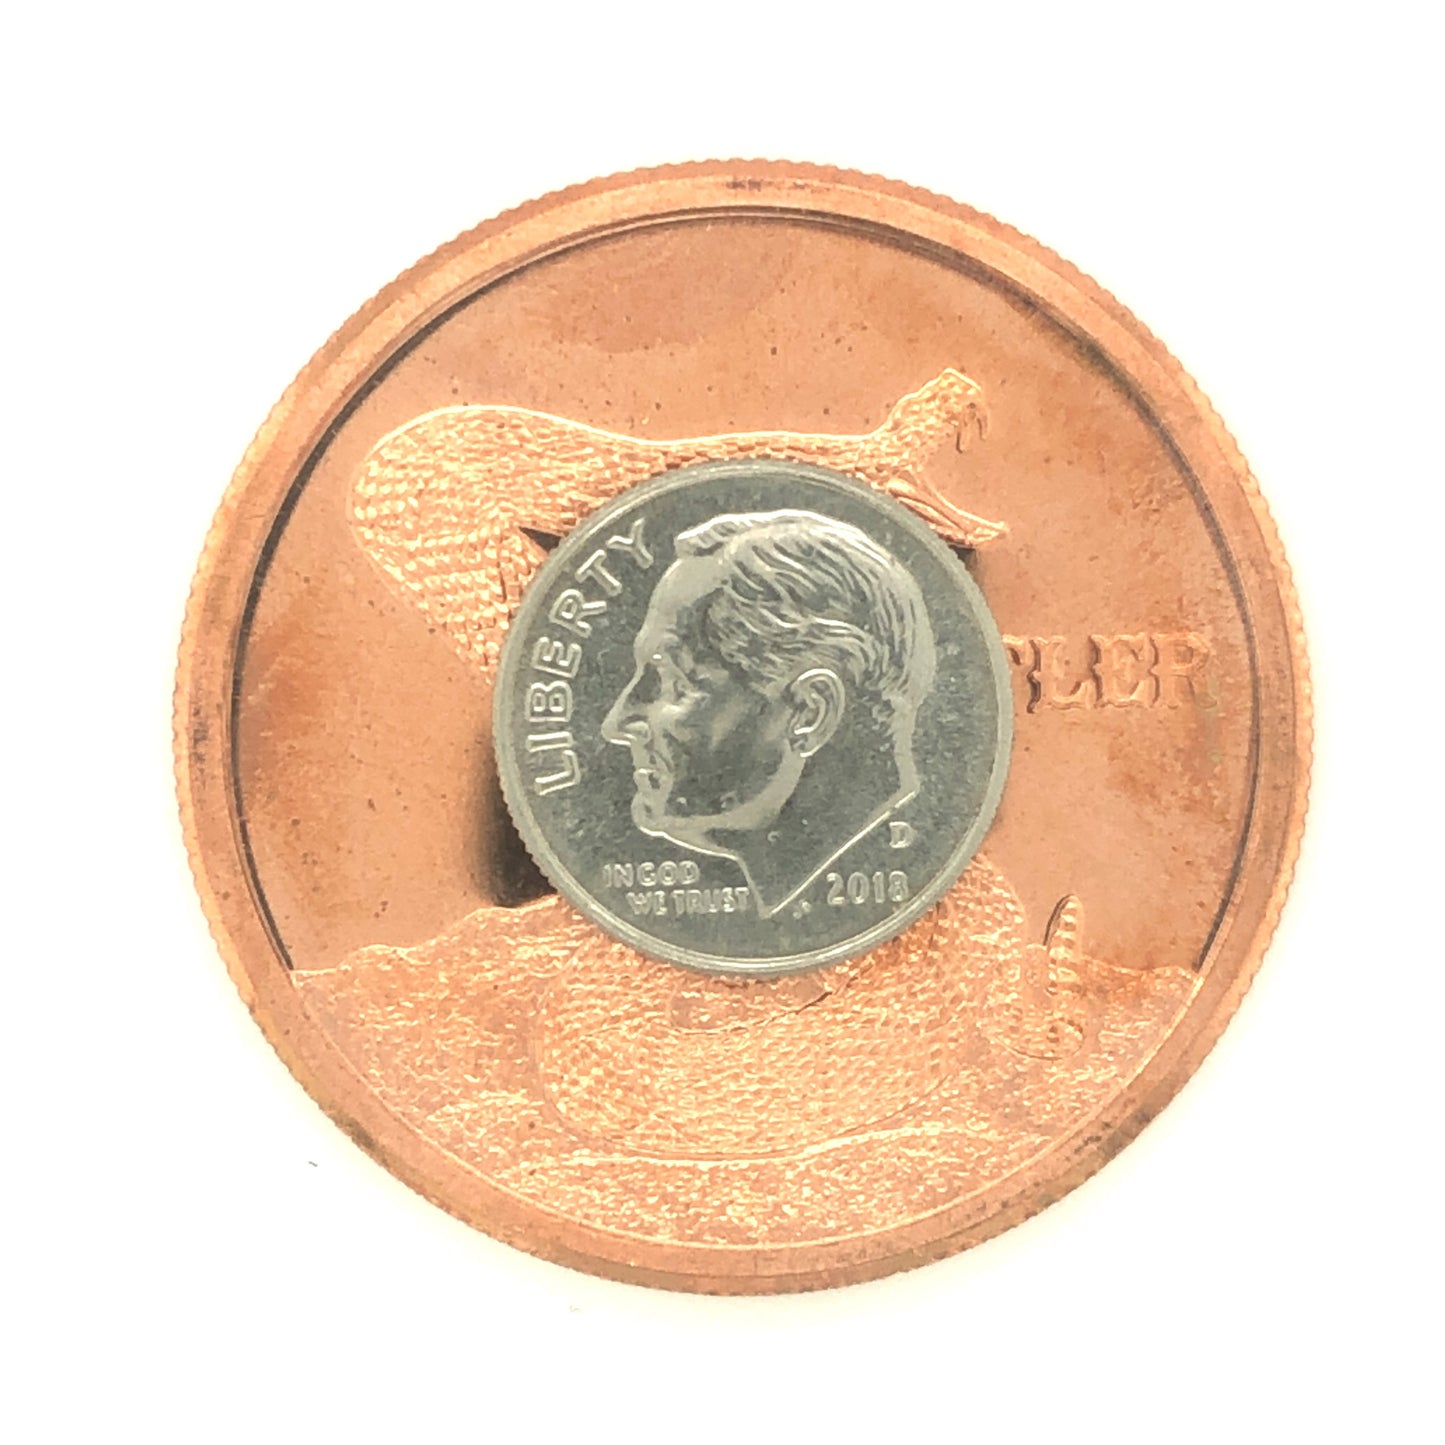 The Rattler 1 oz. .999 Copper Coin